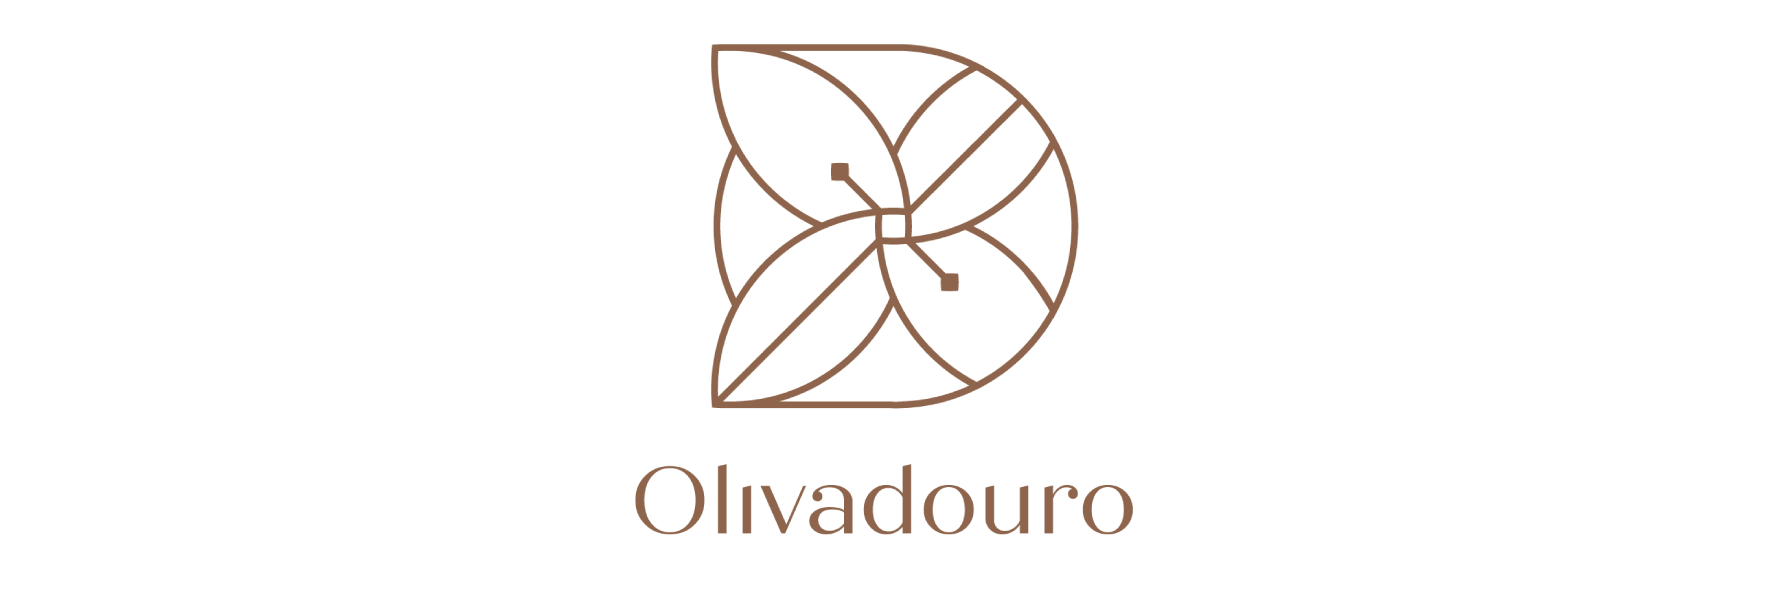 Olivadouro-02